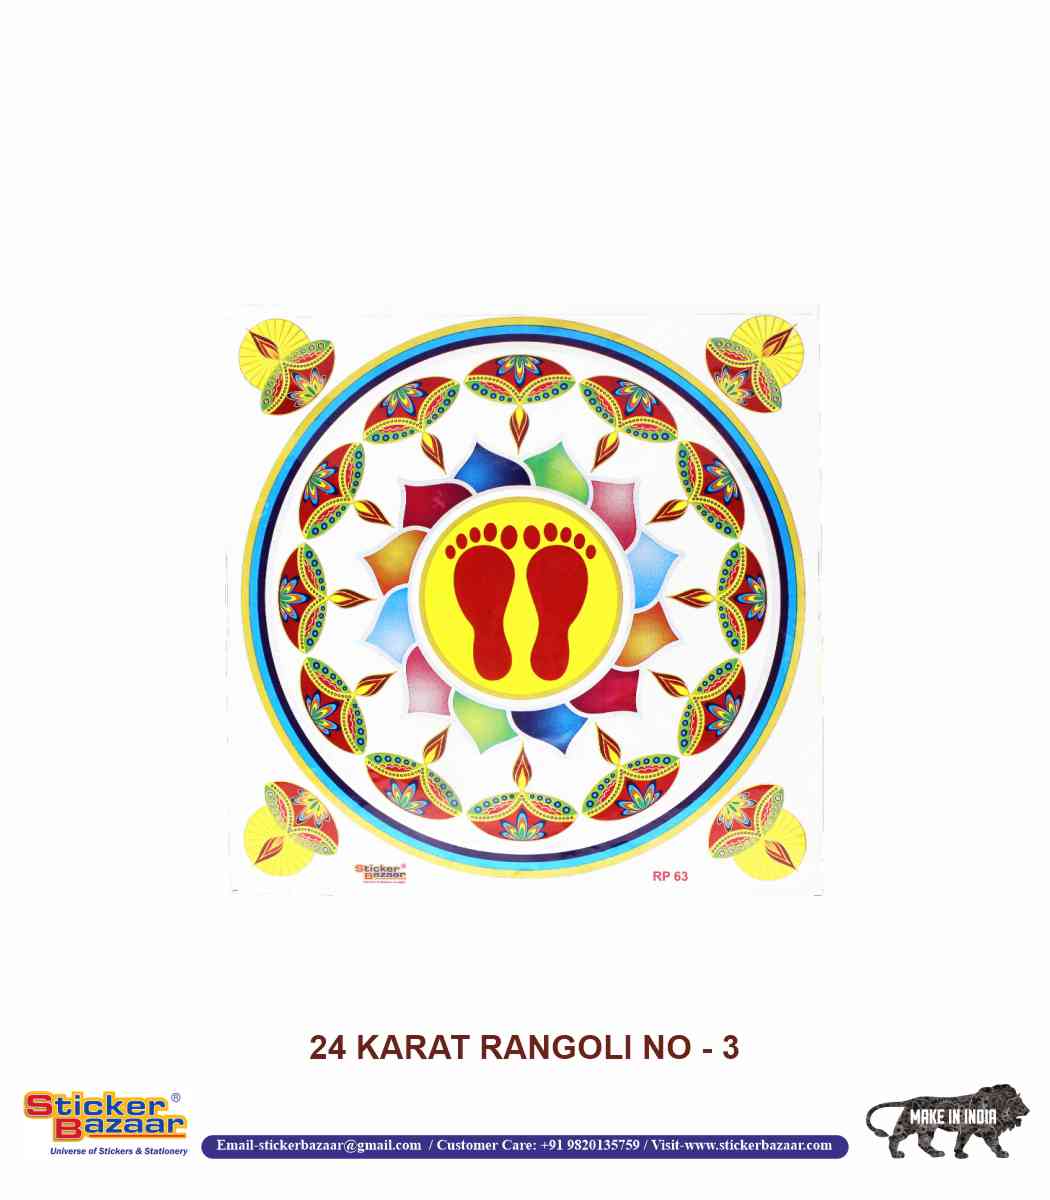 Sticker Bazaar 24 Karat Rangoli KR3